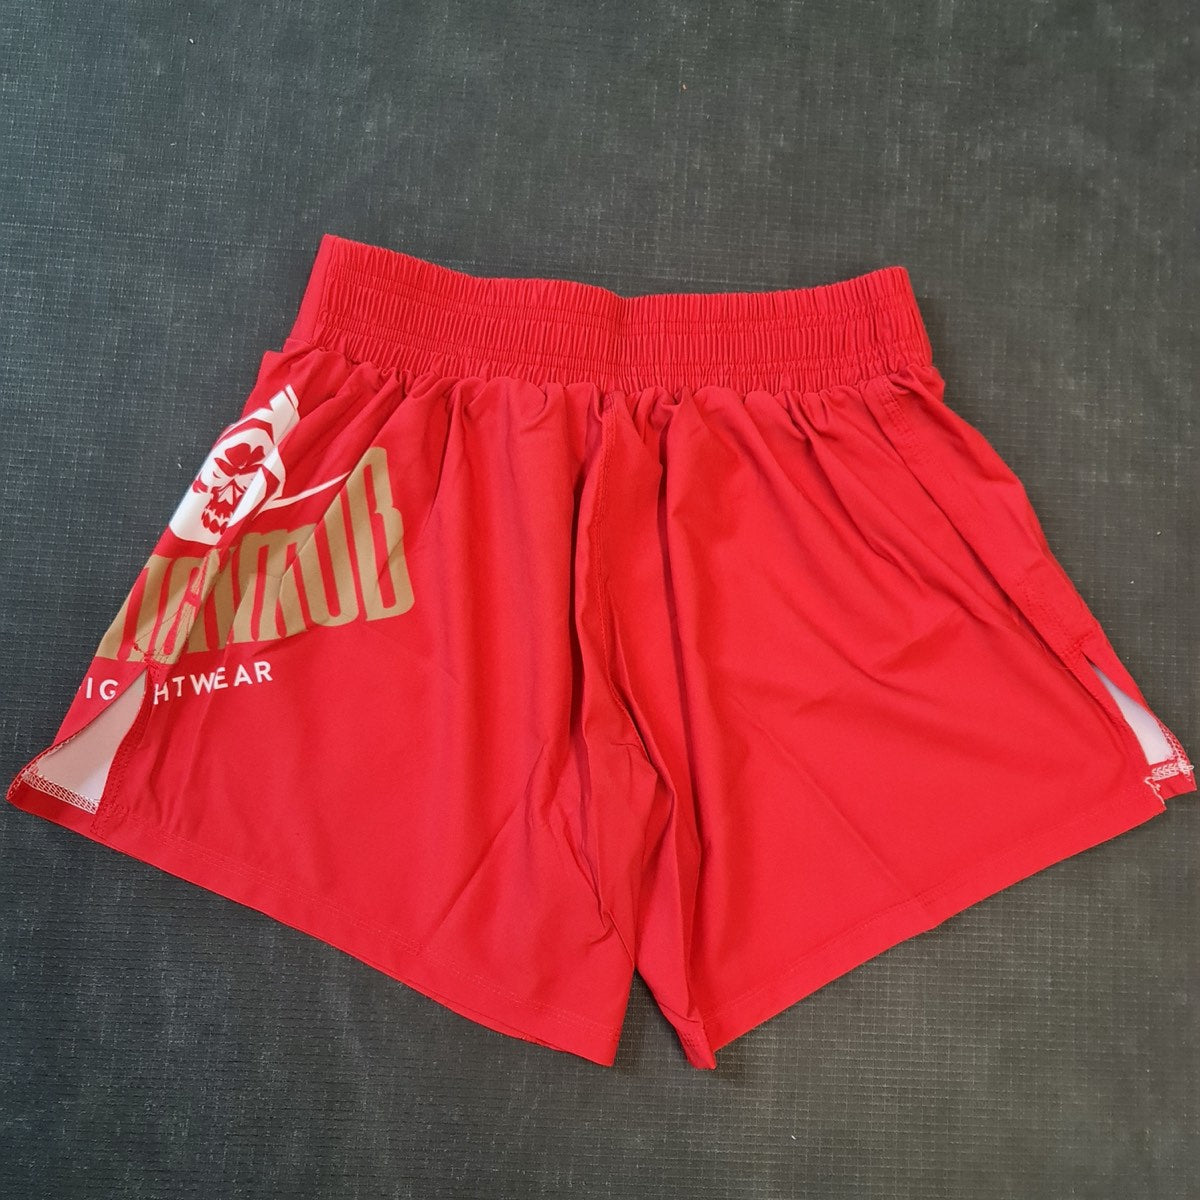 MOB Hybrid shorts red